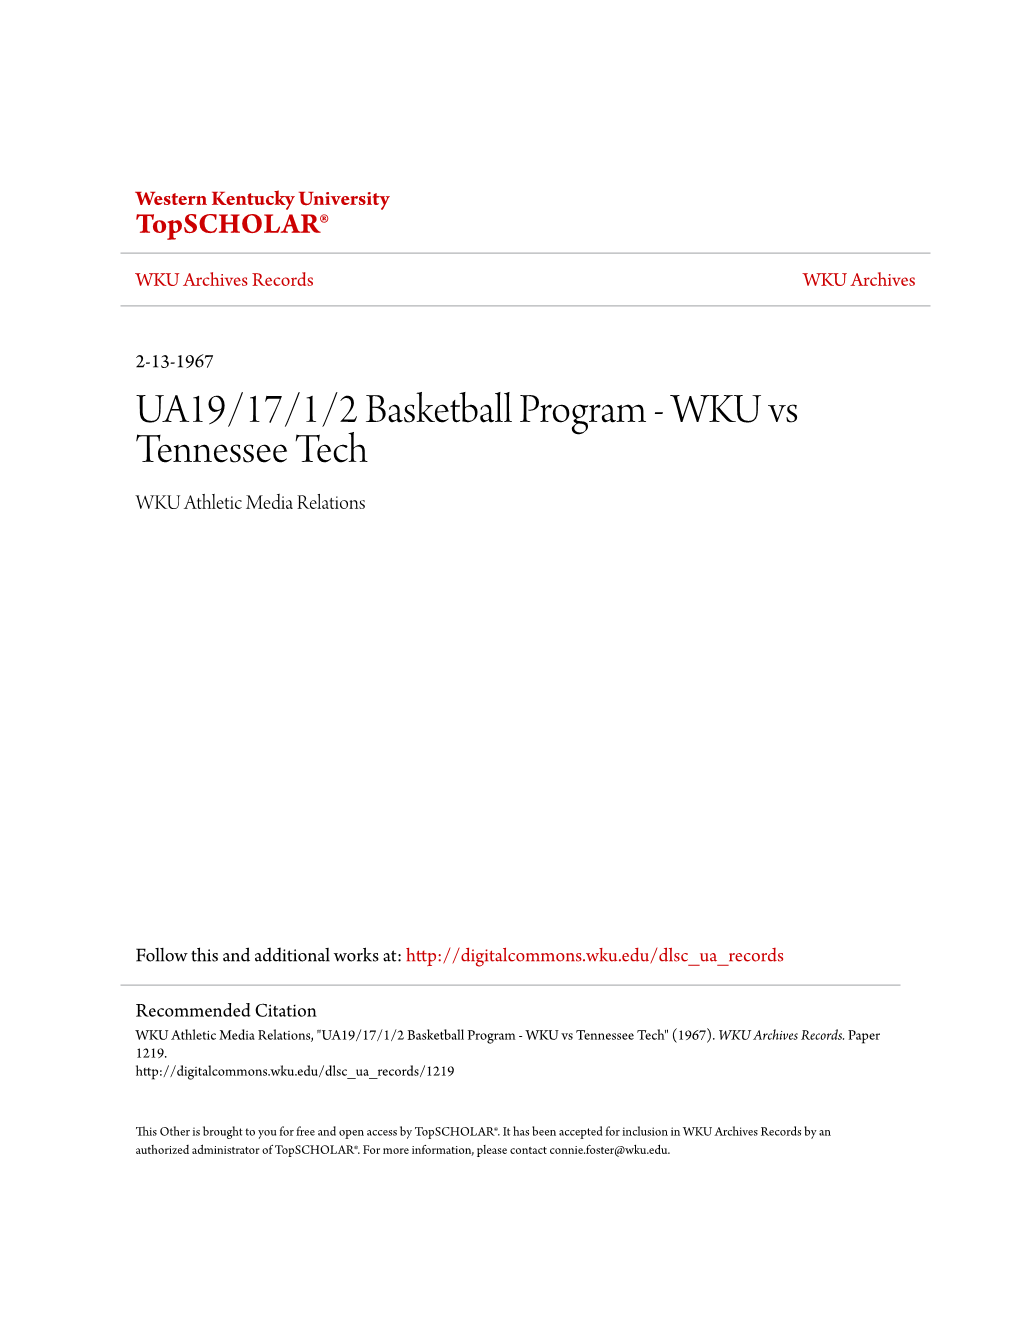 UA19/17/1/2 Basketball Program - WKU Vs Tennessee Tech WKU Athletic Media Relations